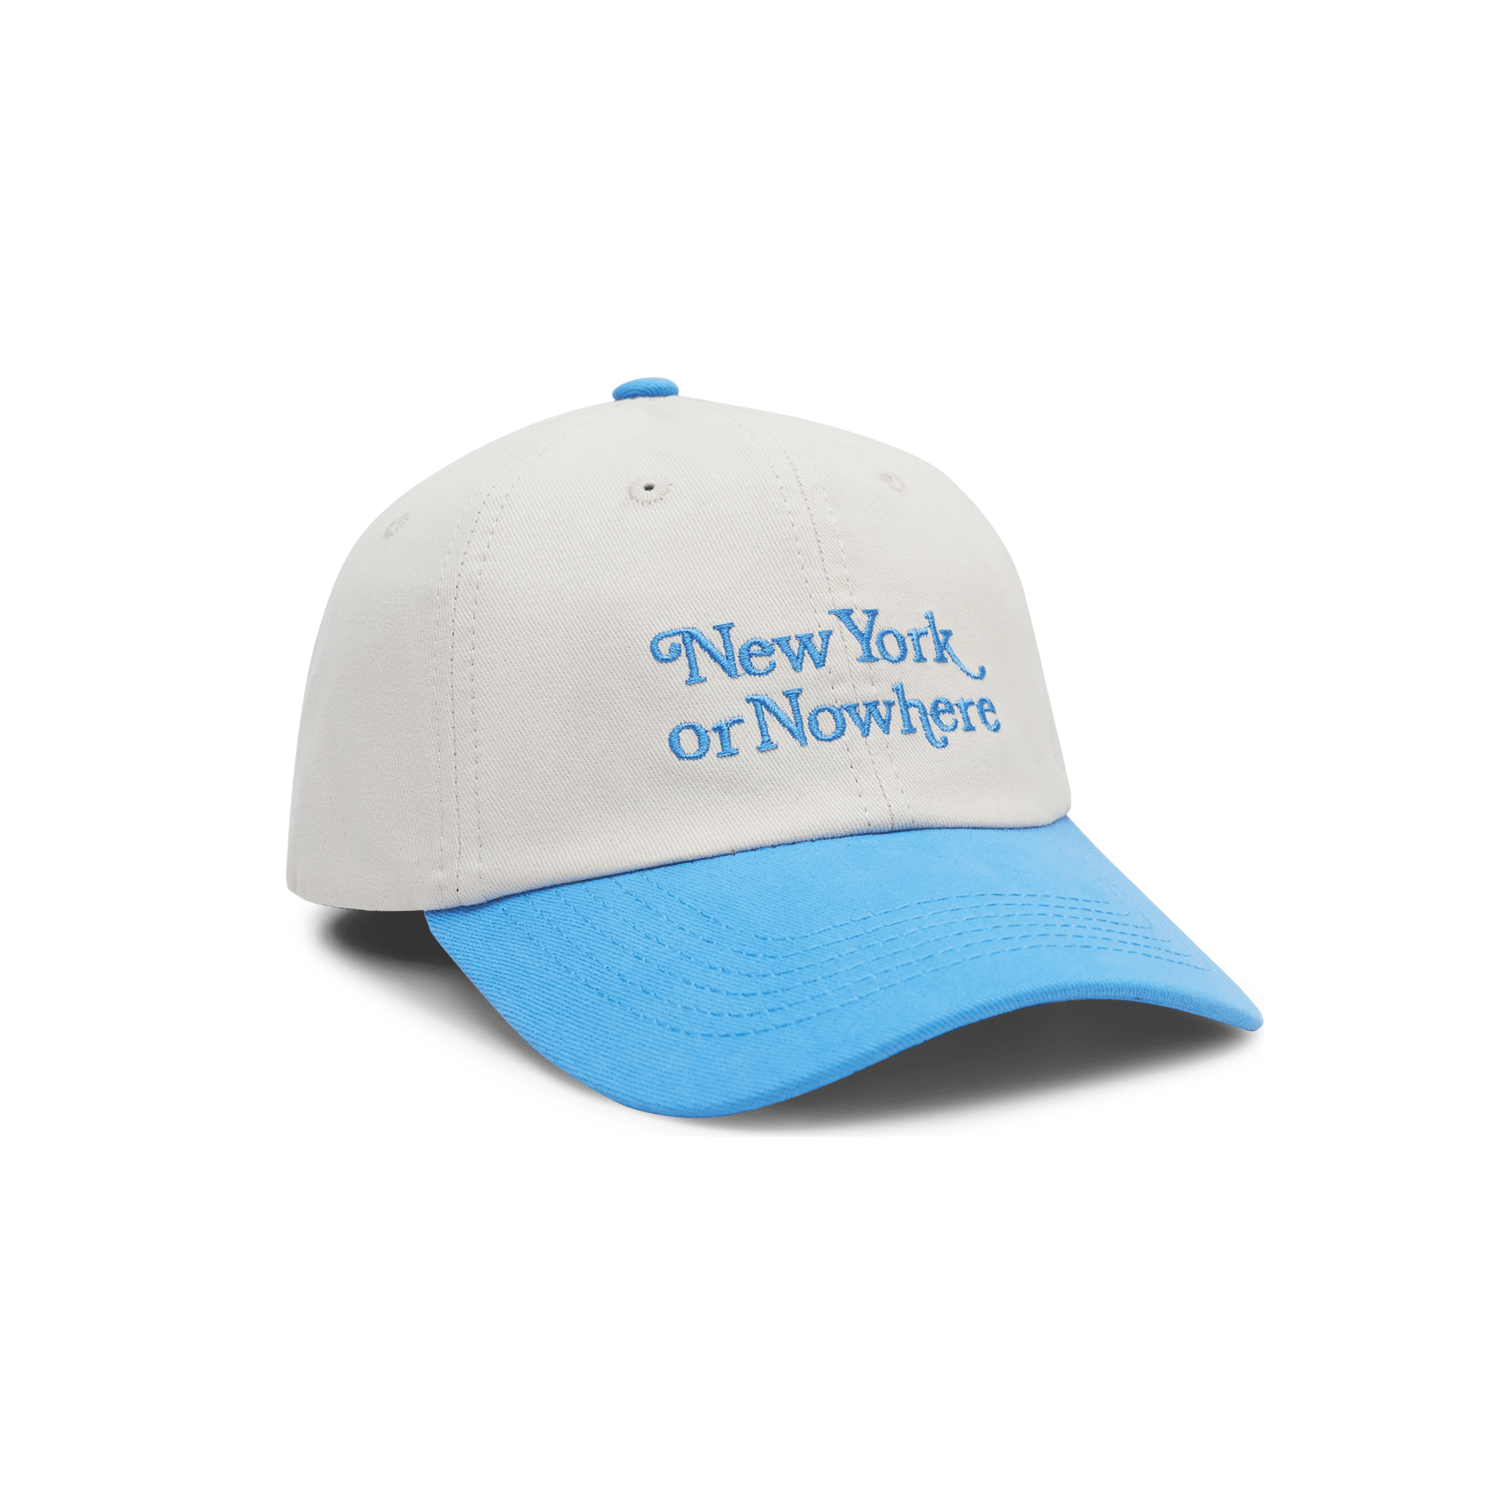 NYON x Knicks Motto Cream/Blue Dad Hat - Angled View